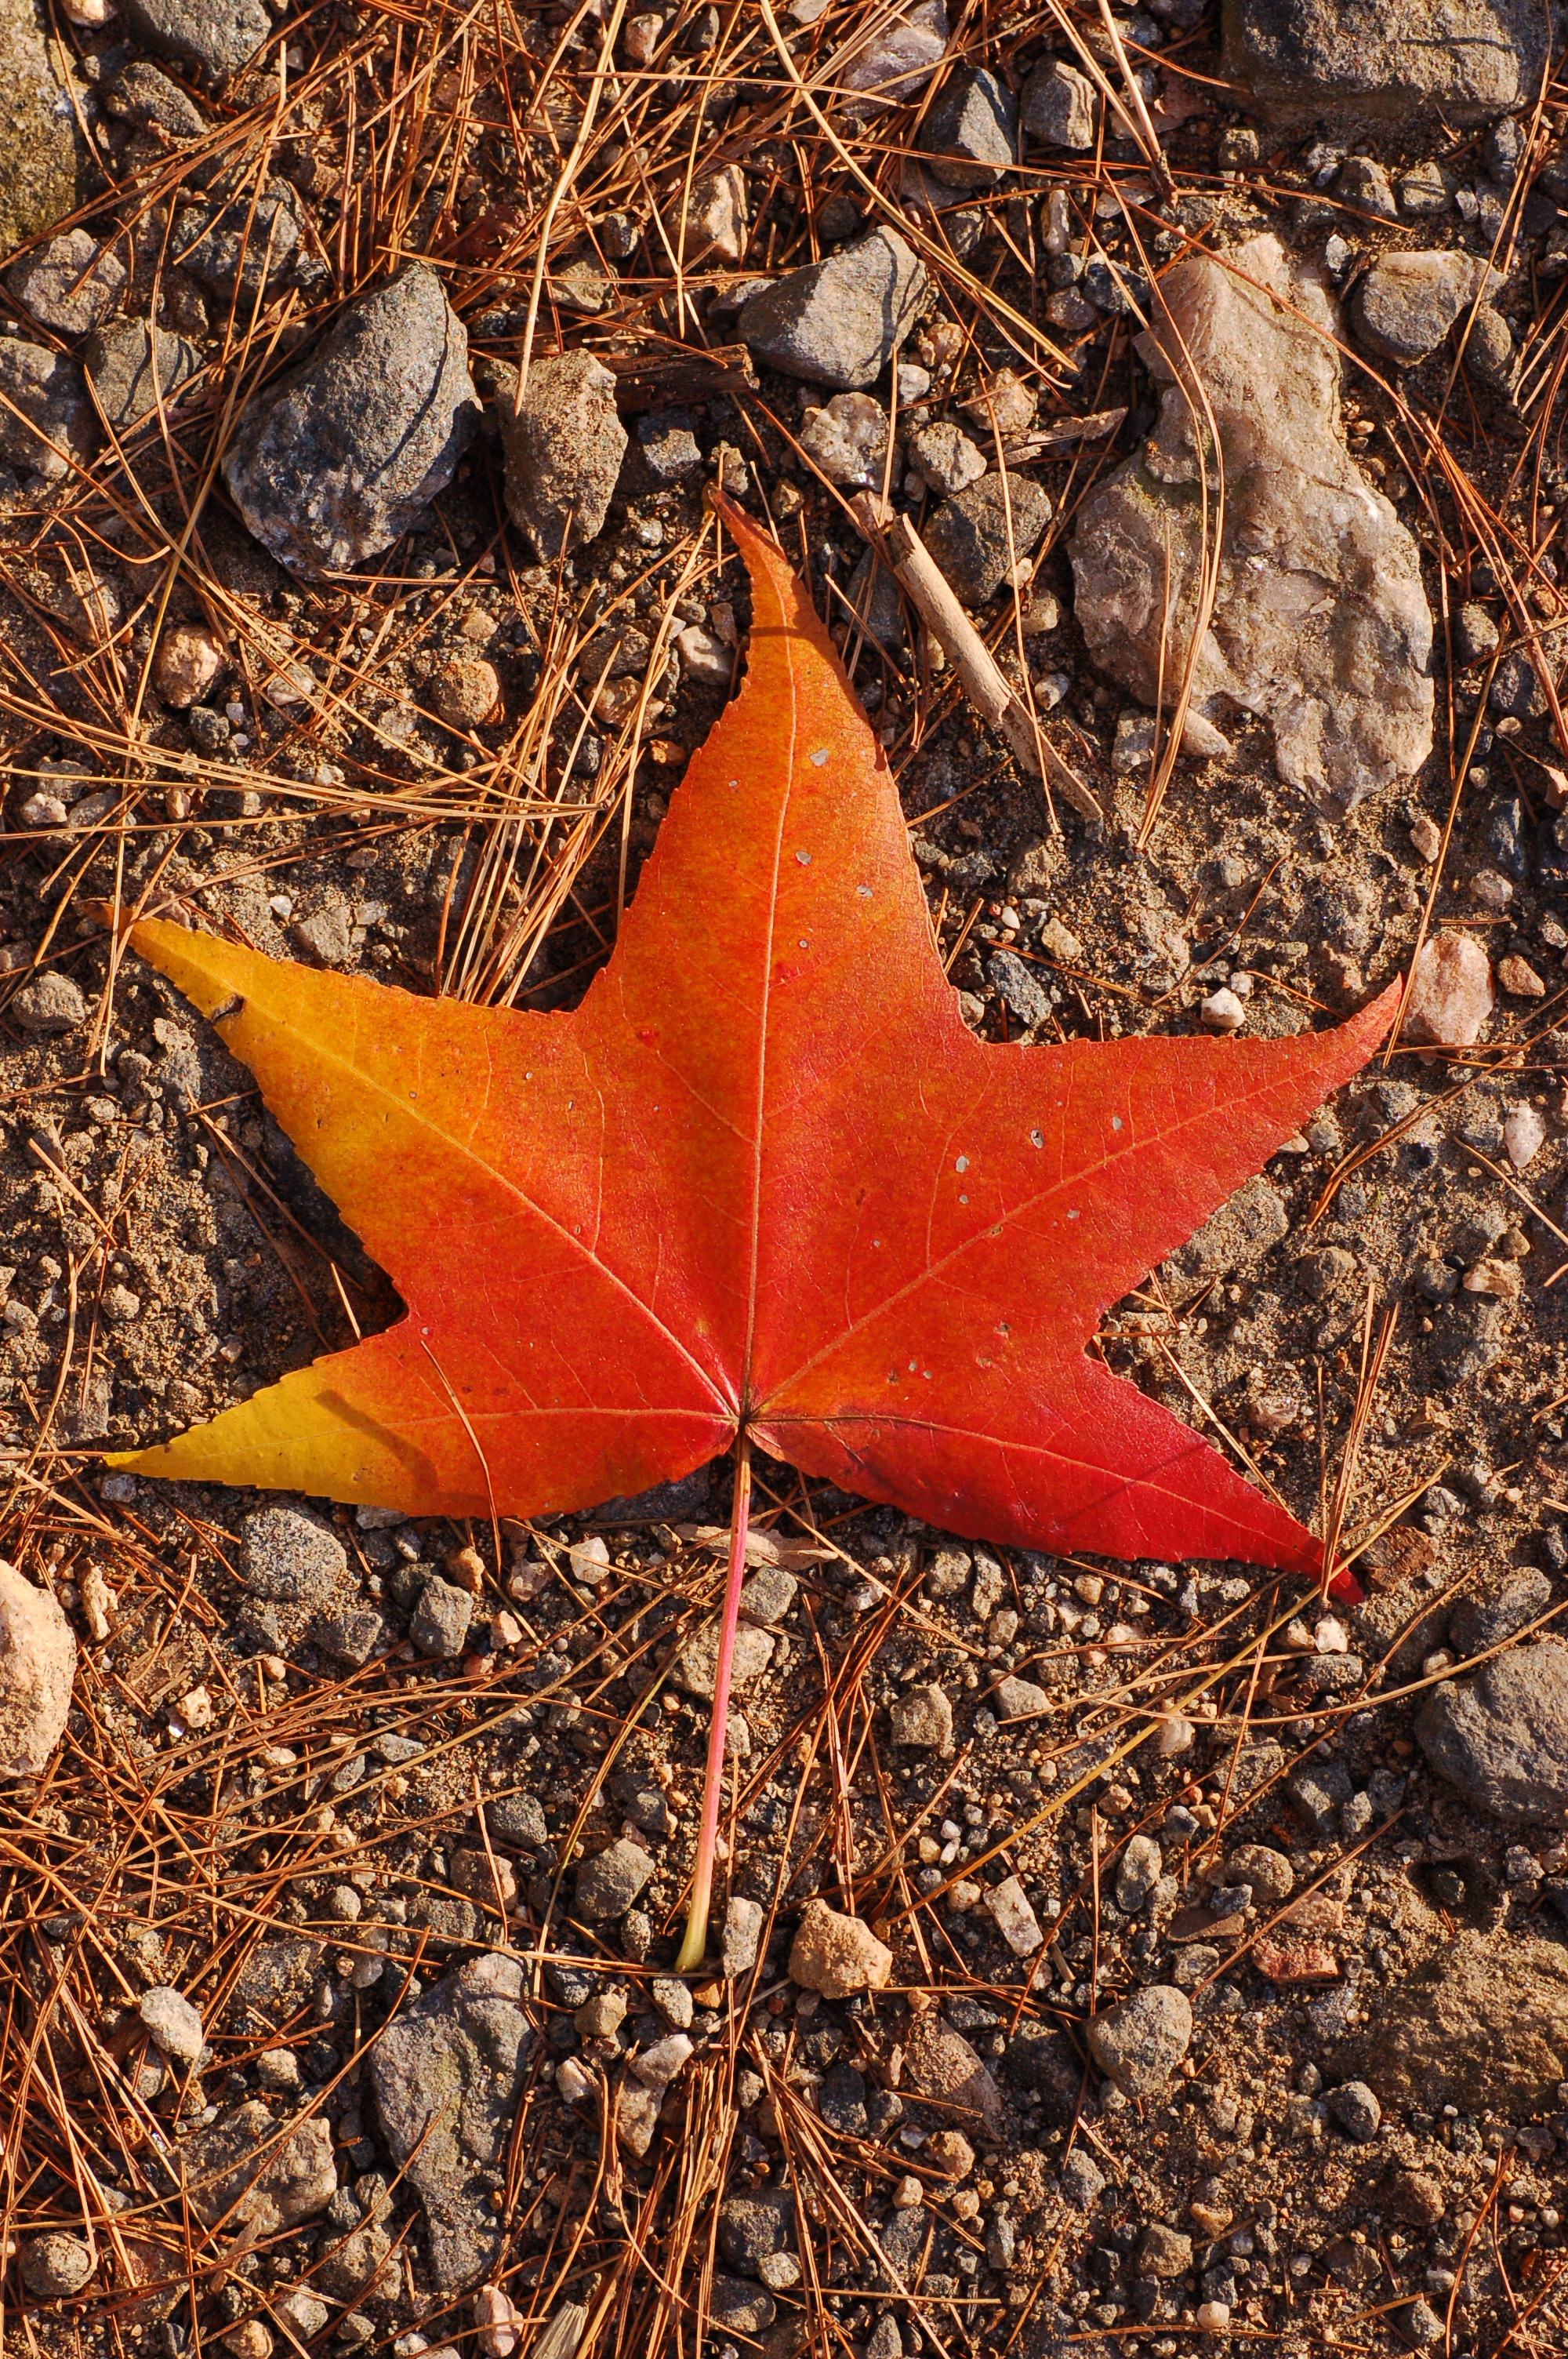 File:Autumn Unidentified Red Orange Leaf 2000px.jpg - Wikimedia Commons